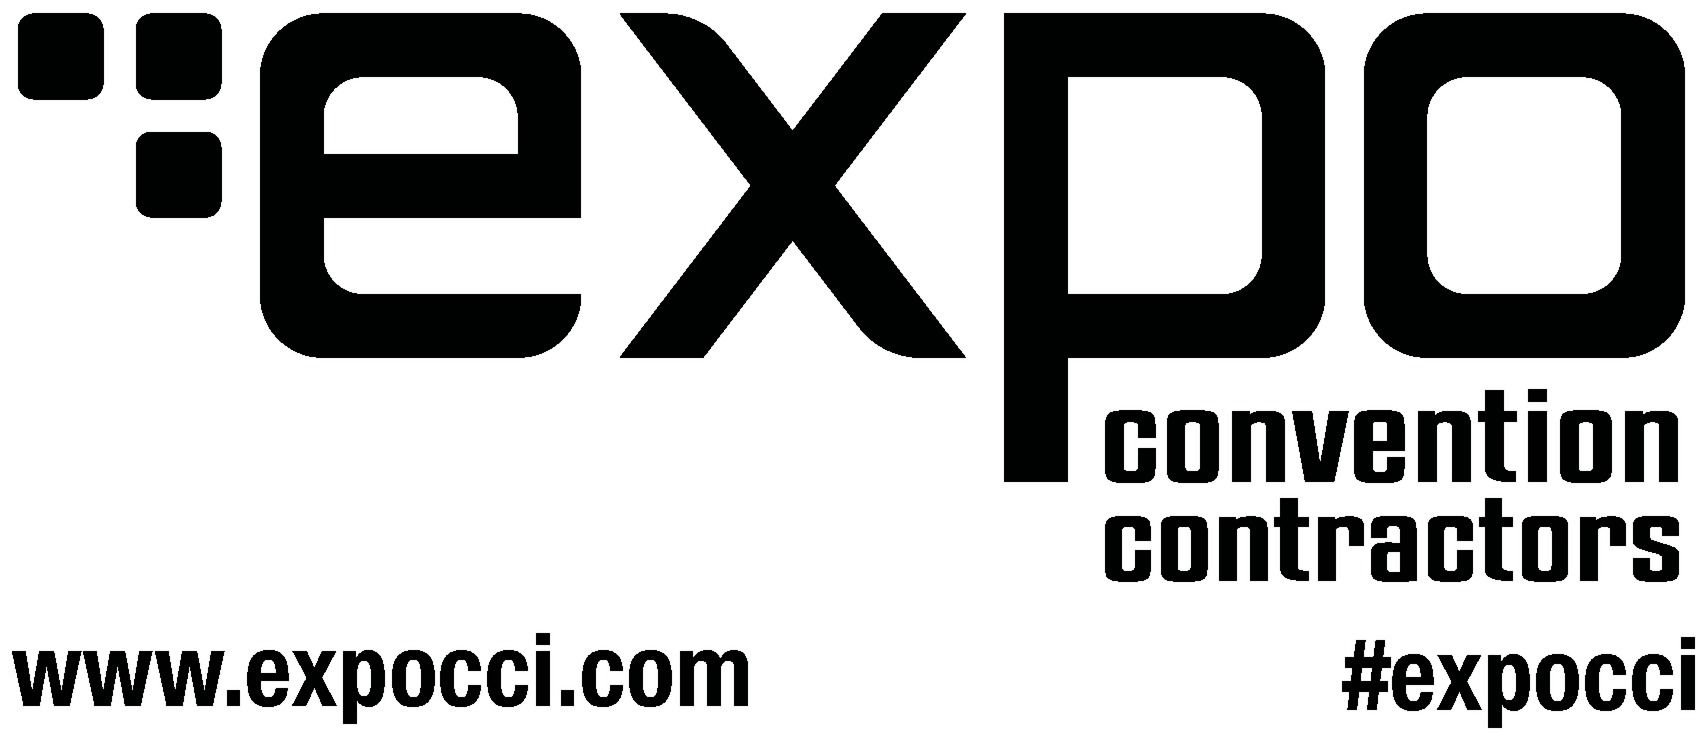 expo convention contractors